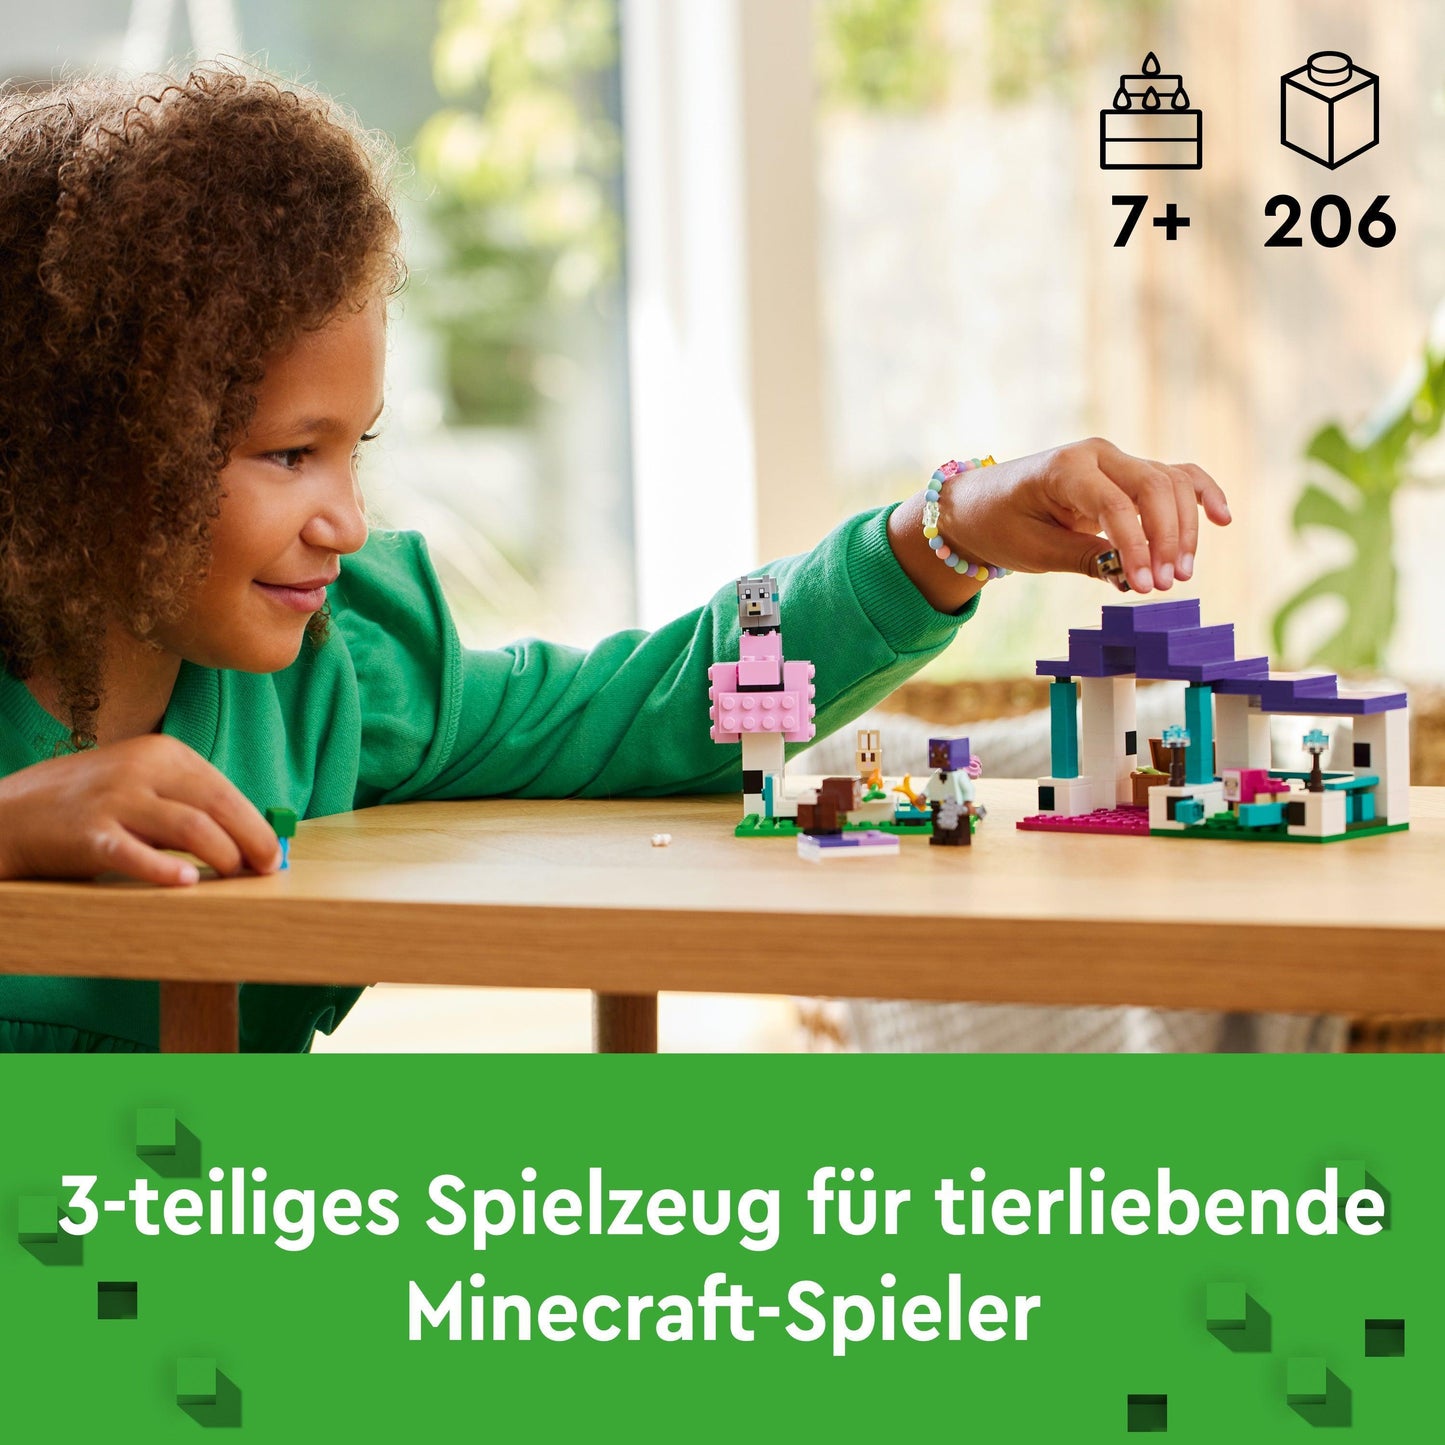 LEGO Het dierenasiel 21253 Minecraft | 2TTOYS ✓ Official shop<br>